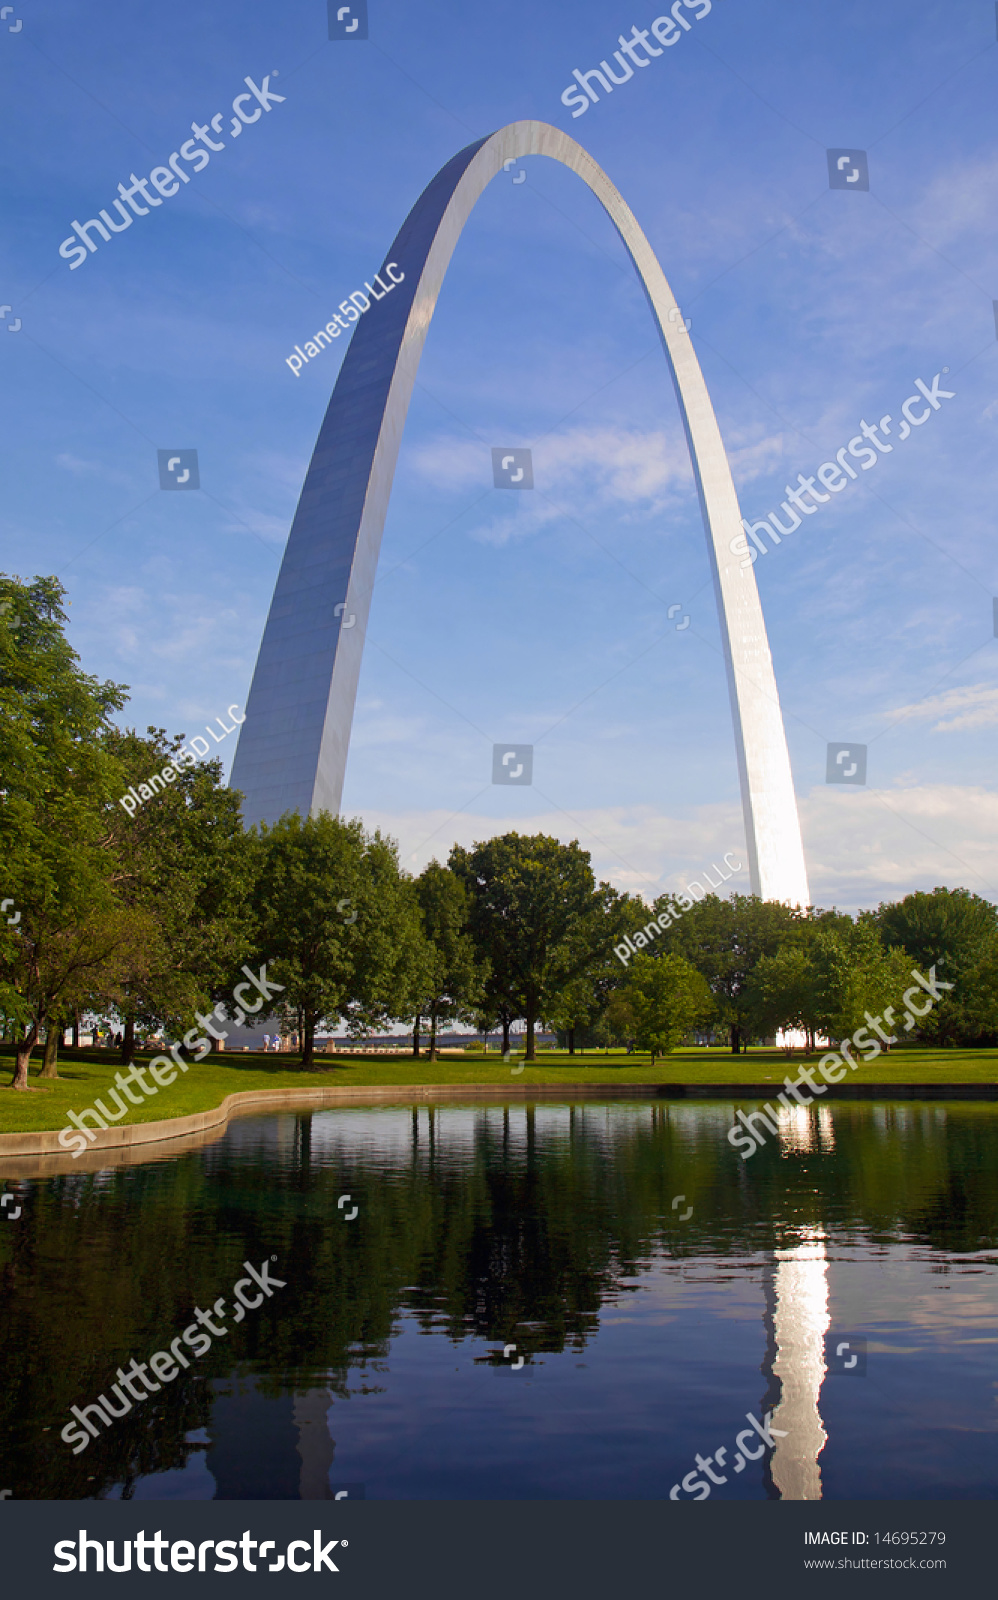 Interesting View St Louis Arch Gateway Stock Photo 14695279 - Shutterstock